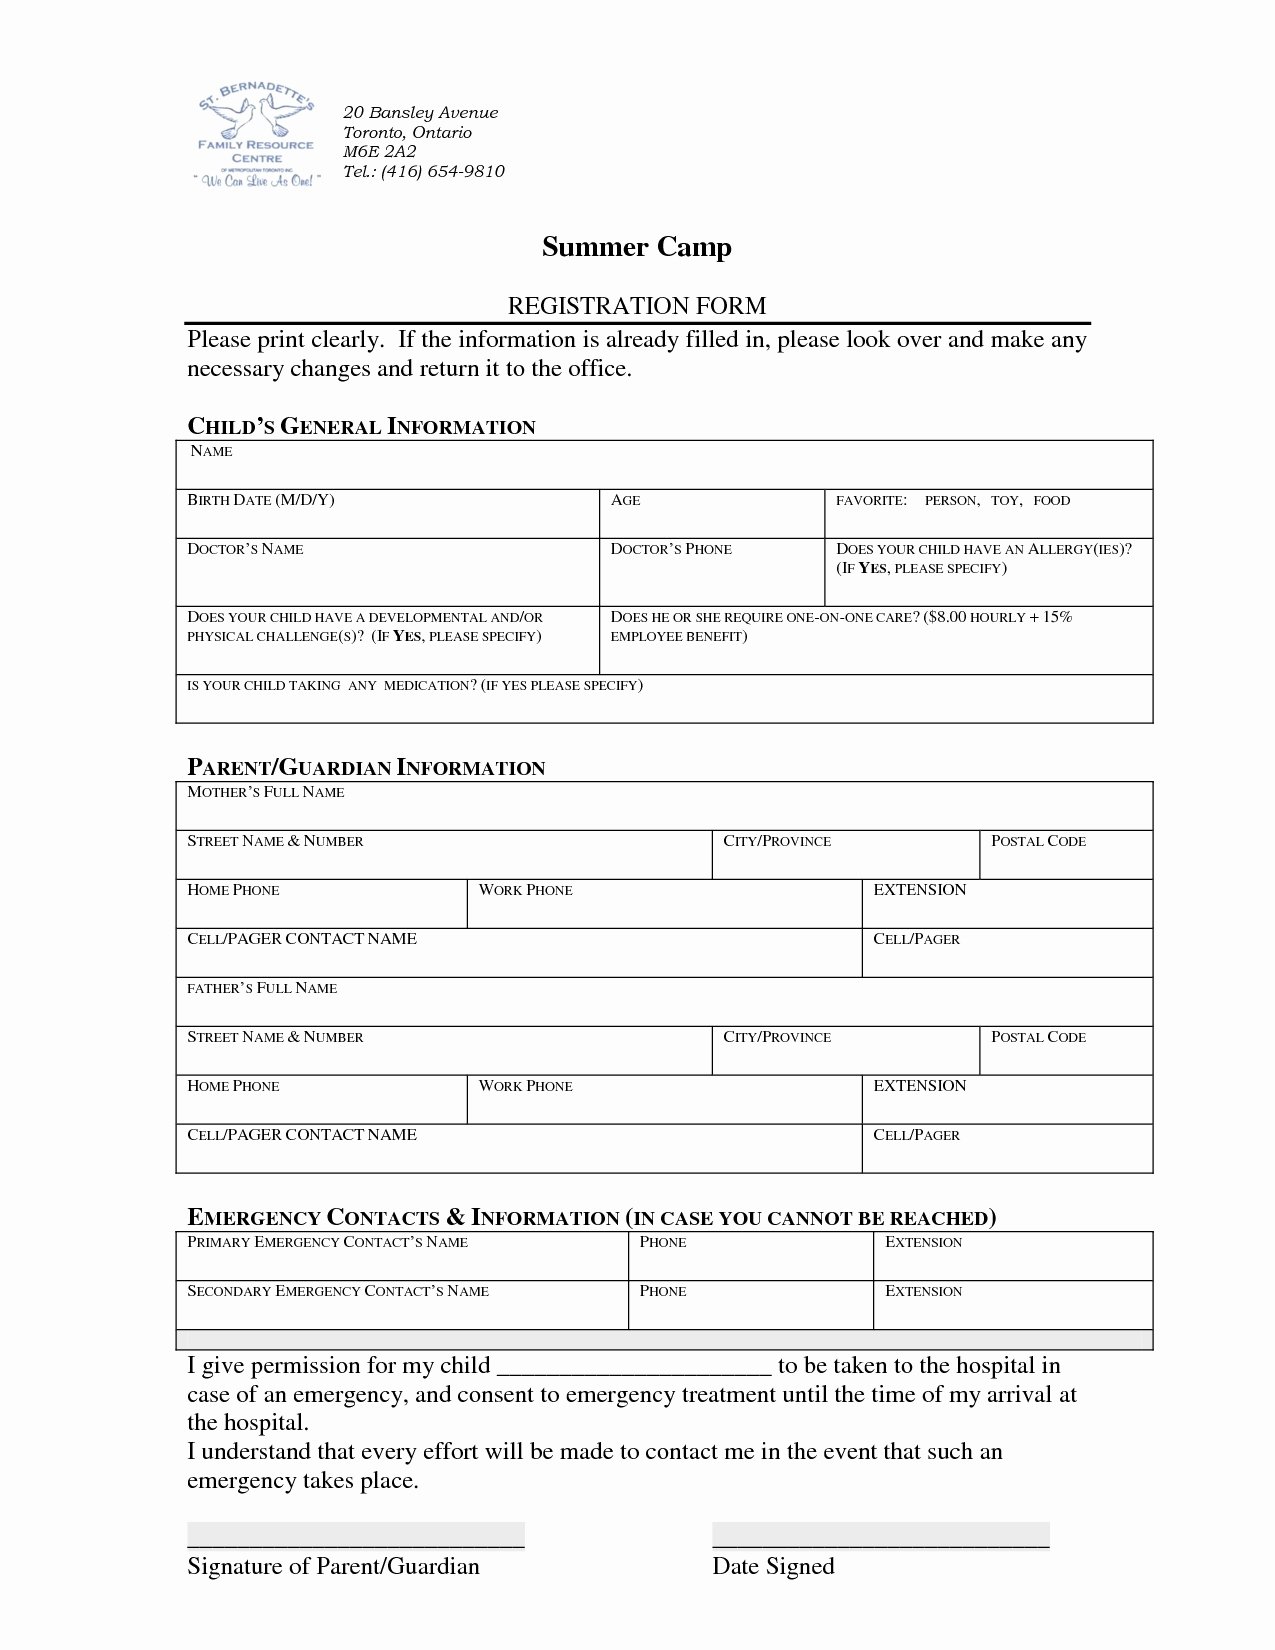 Camp Registration form Template Unique Best form Template Download Proshredelite Page 293 Of